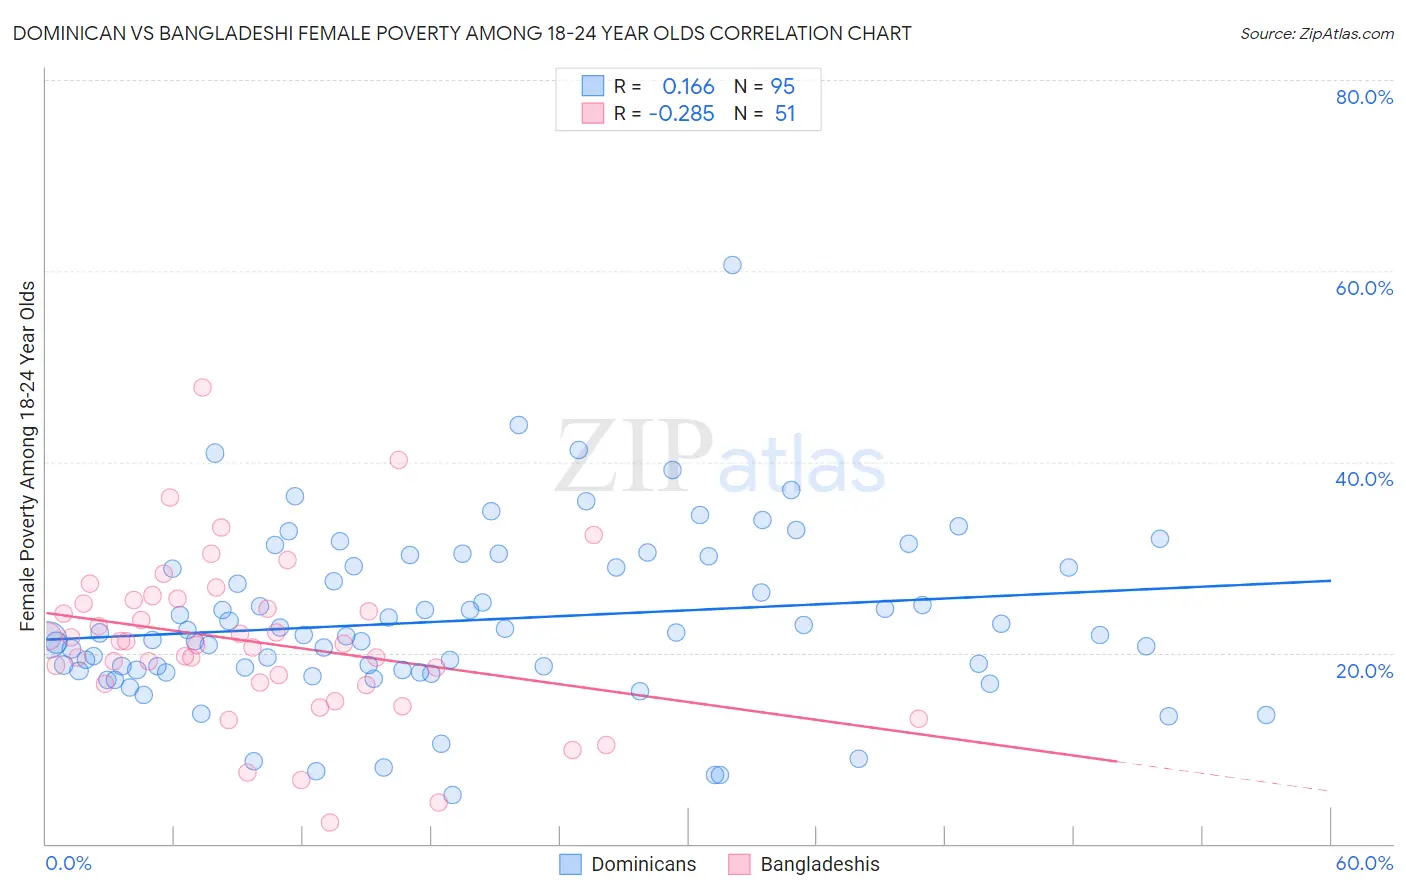 Dominican vs Bangladeshi Female Poverty Among 18-24 Year Olds